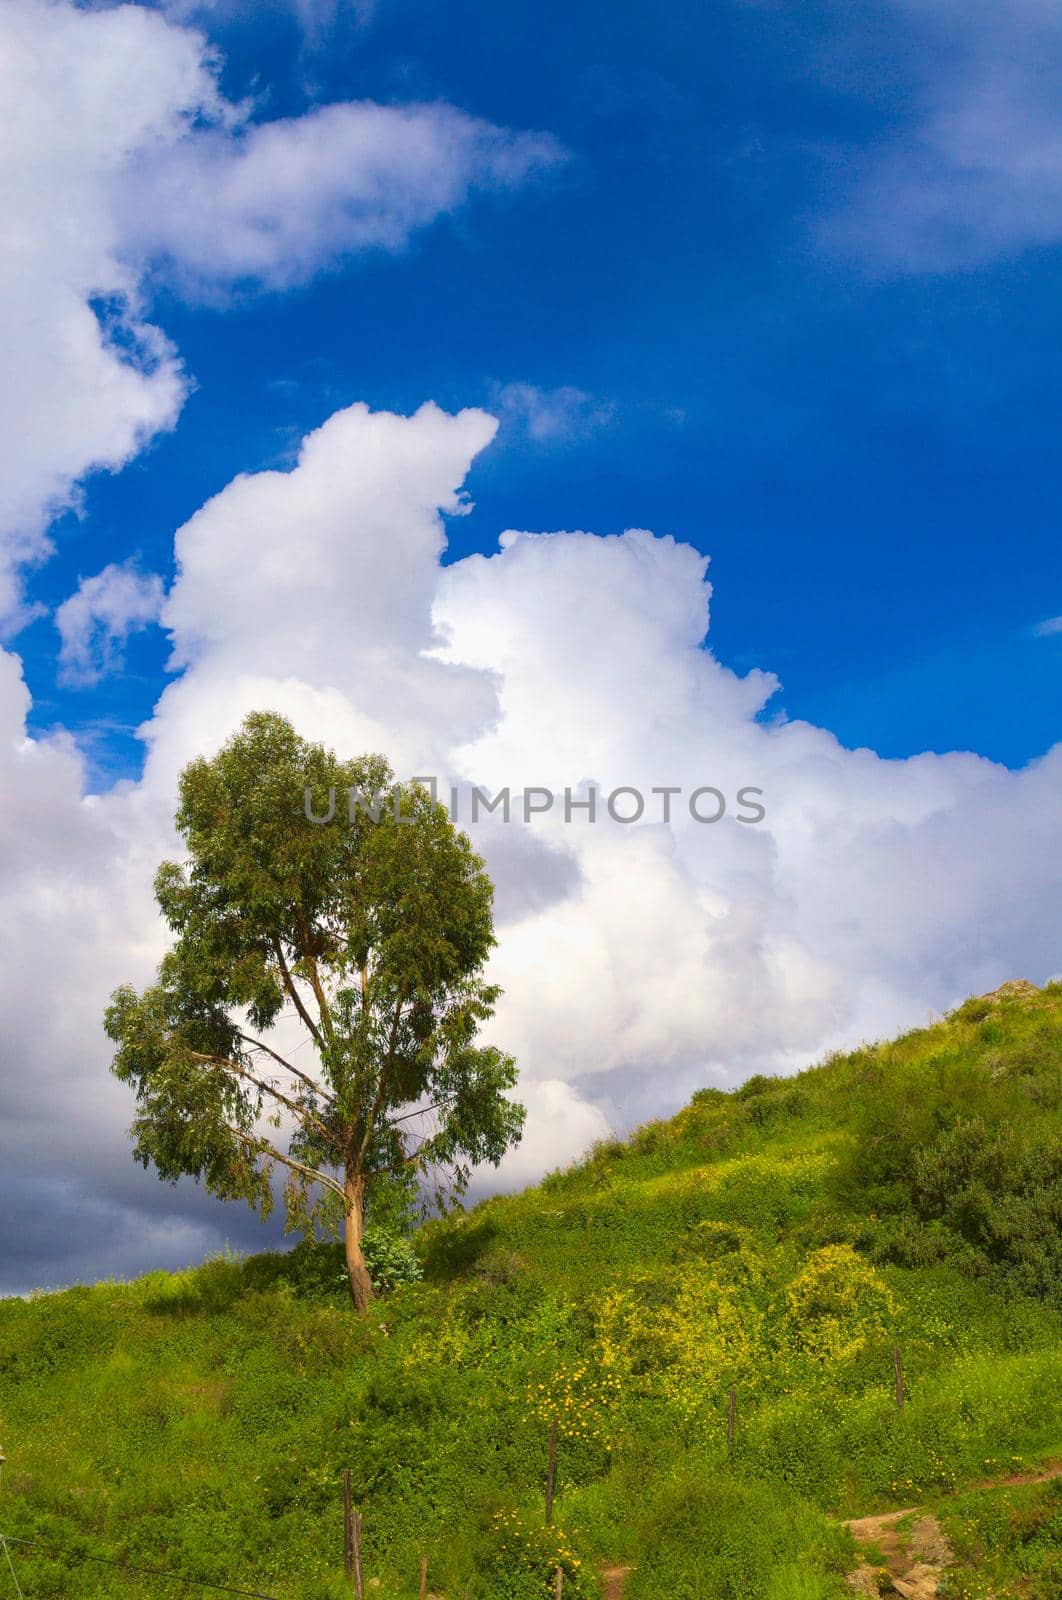 Lone tree against an epic sky full of billowy clouds by hernan_hyper